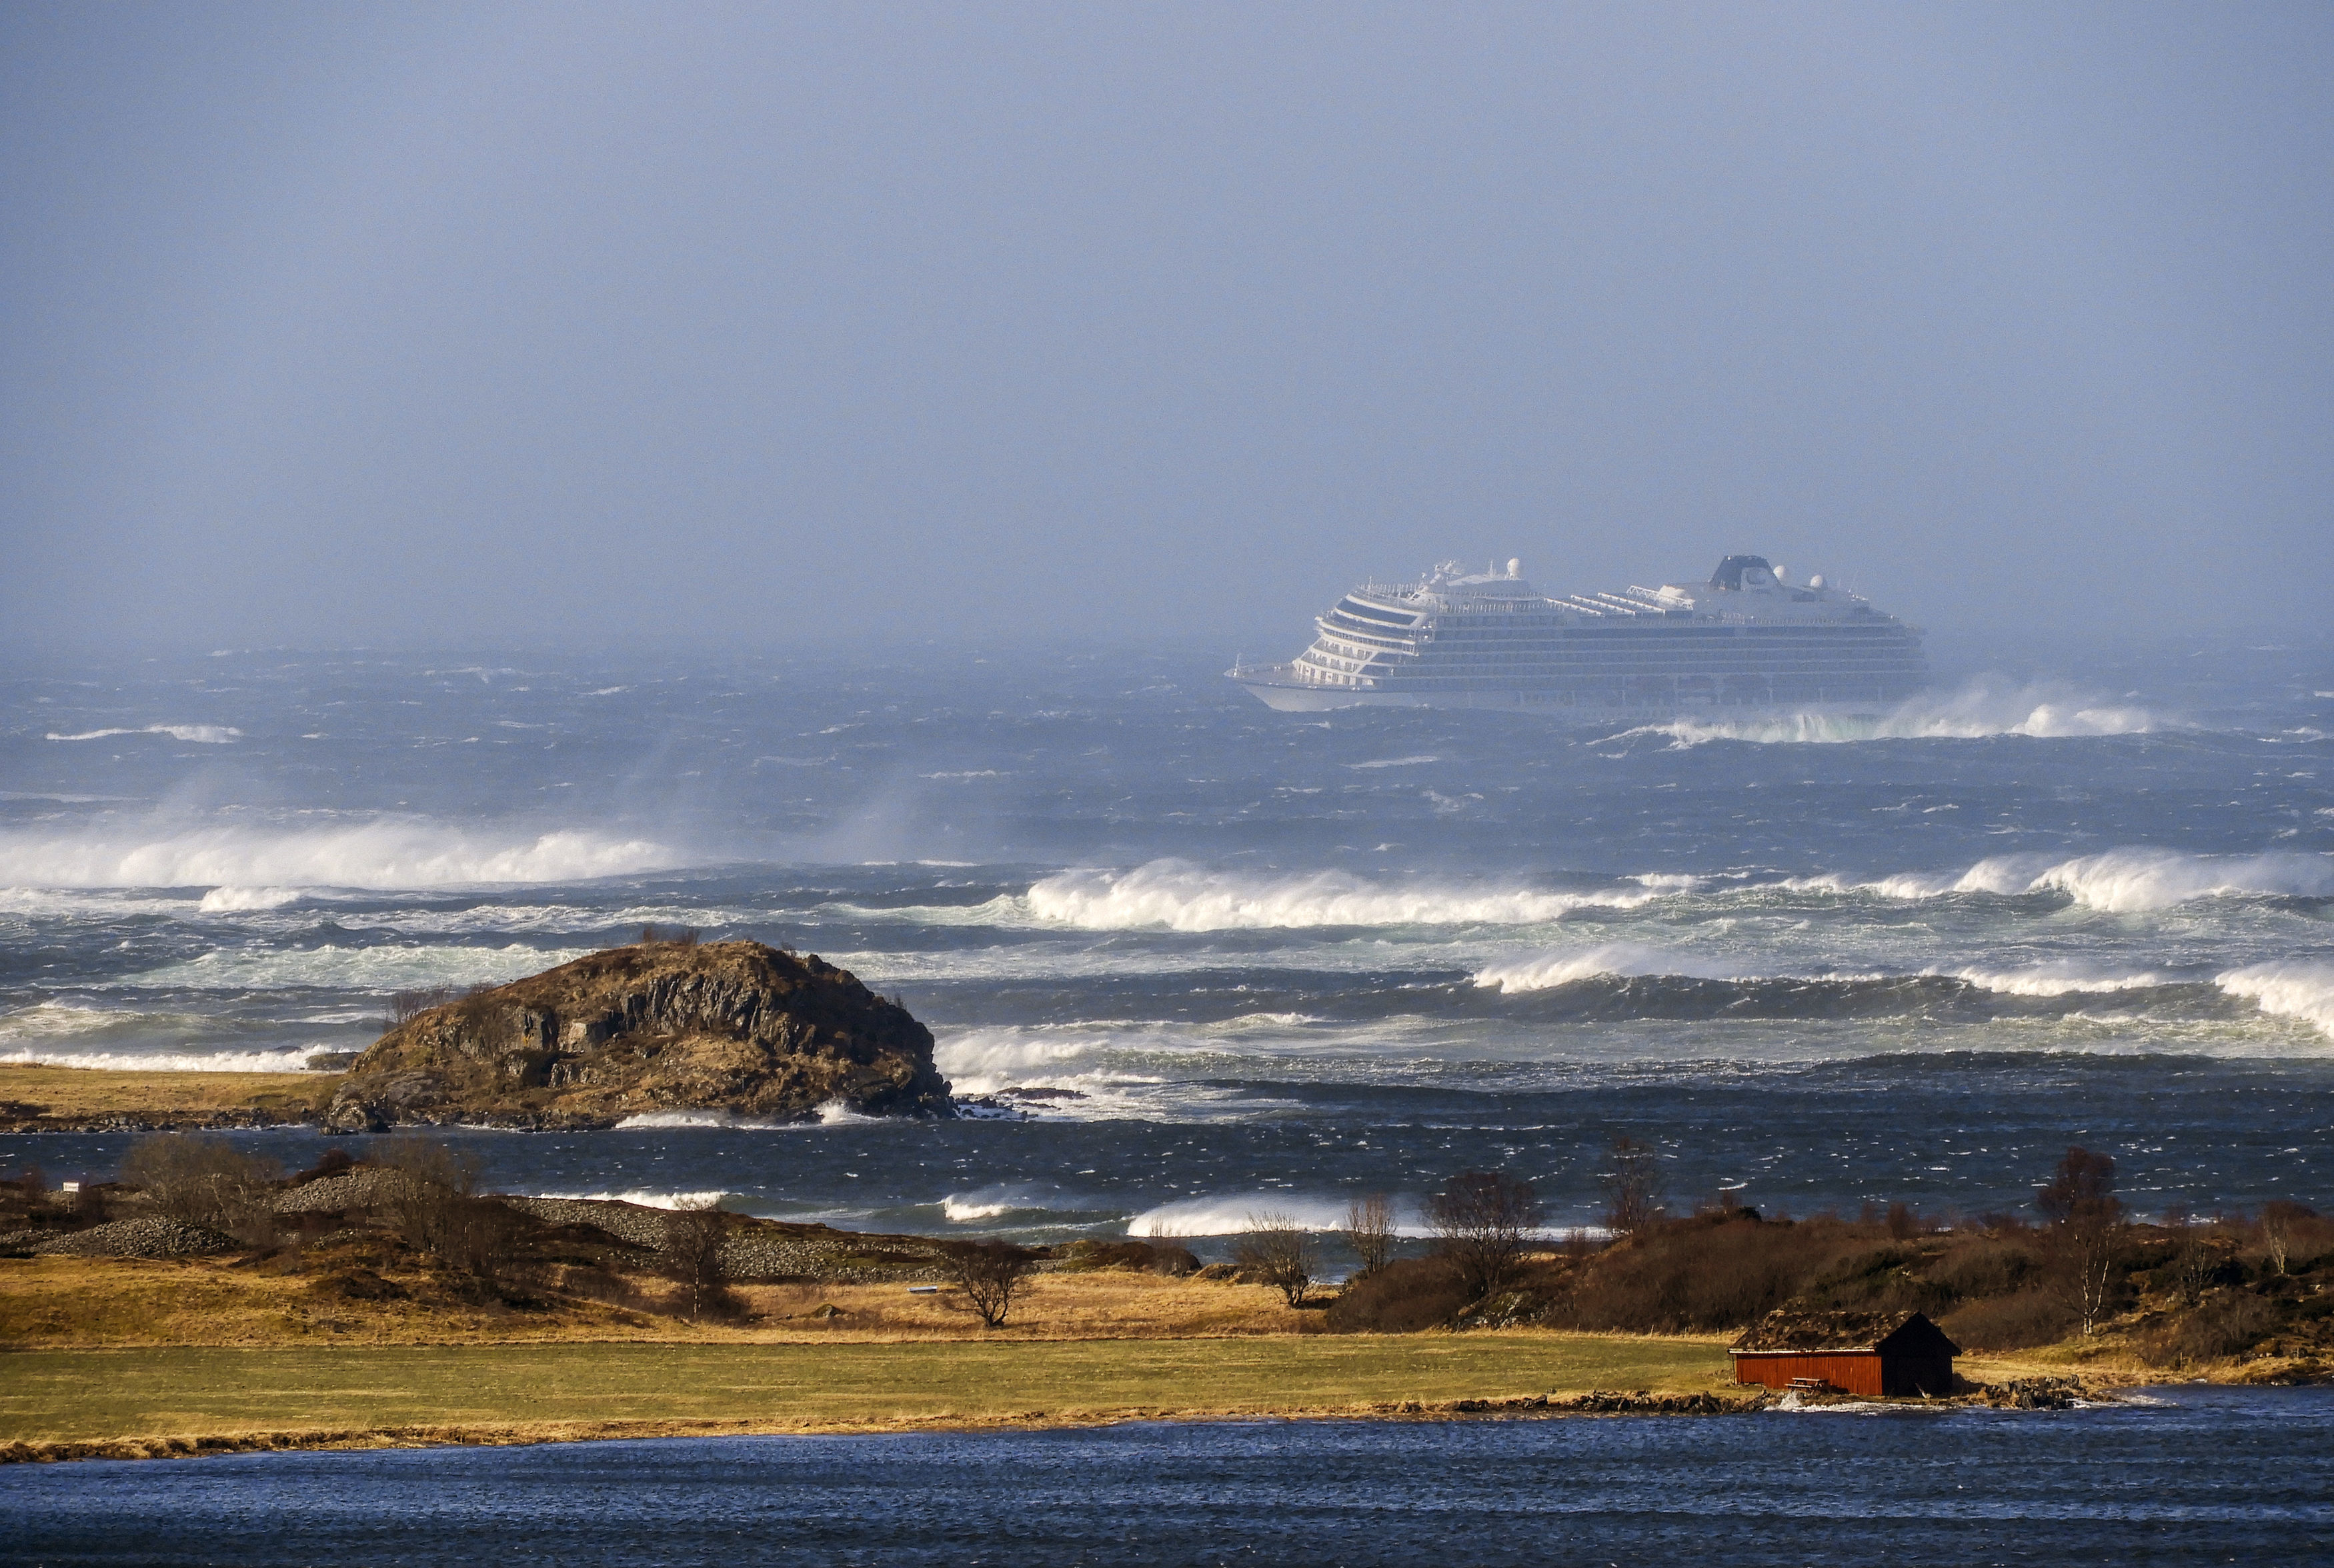 Cruise ship Viking Sky runs into trouble off the Norwegian coast